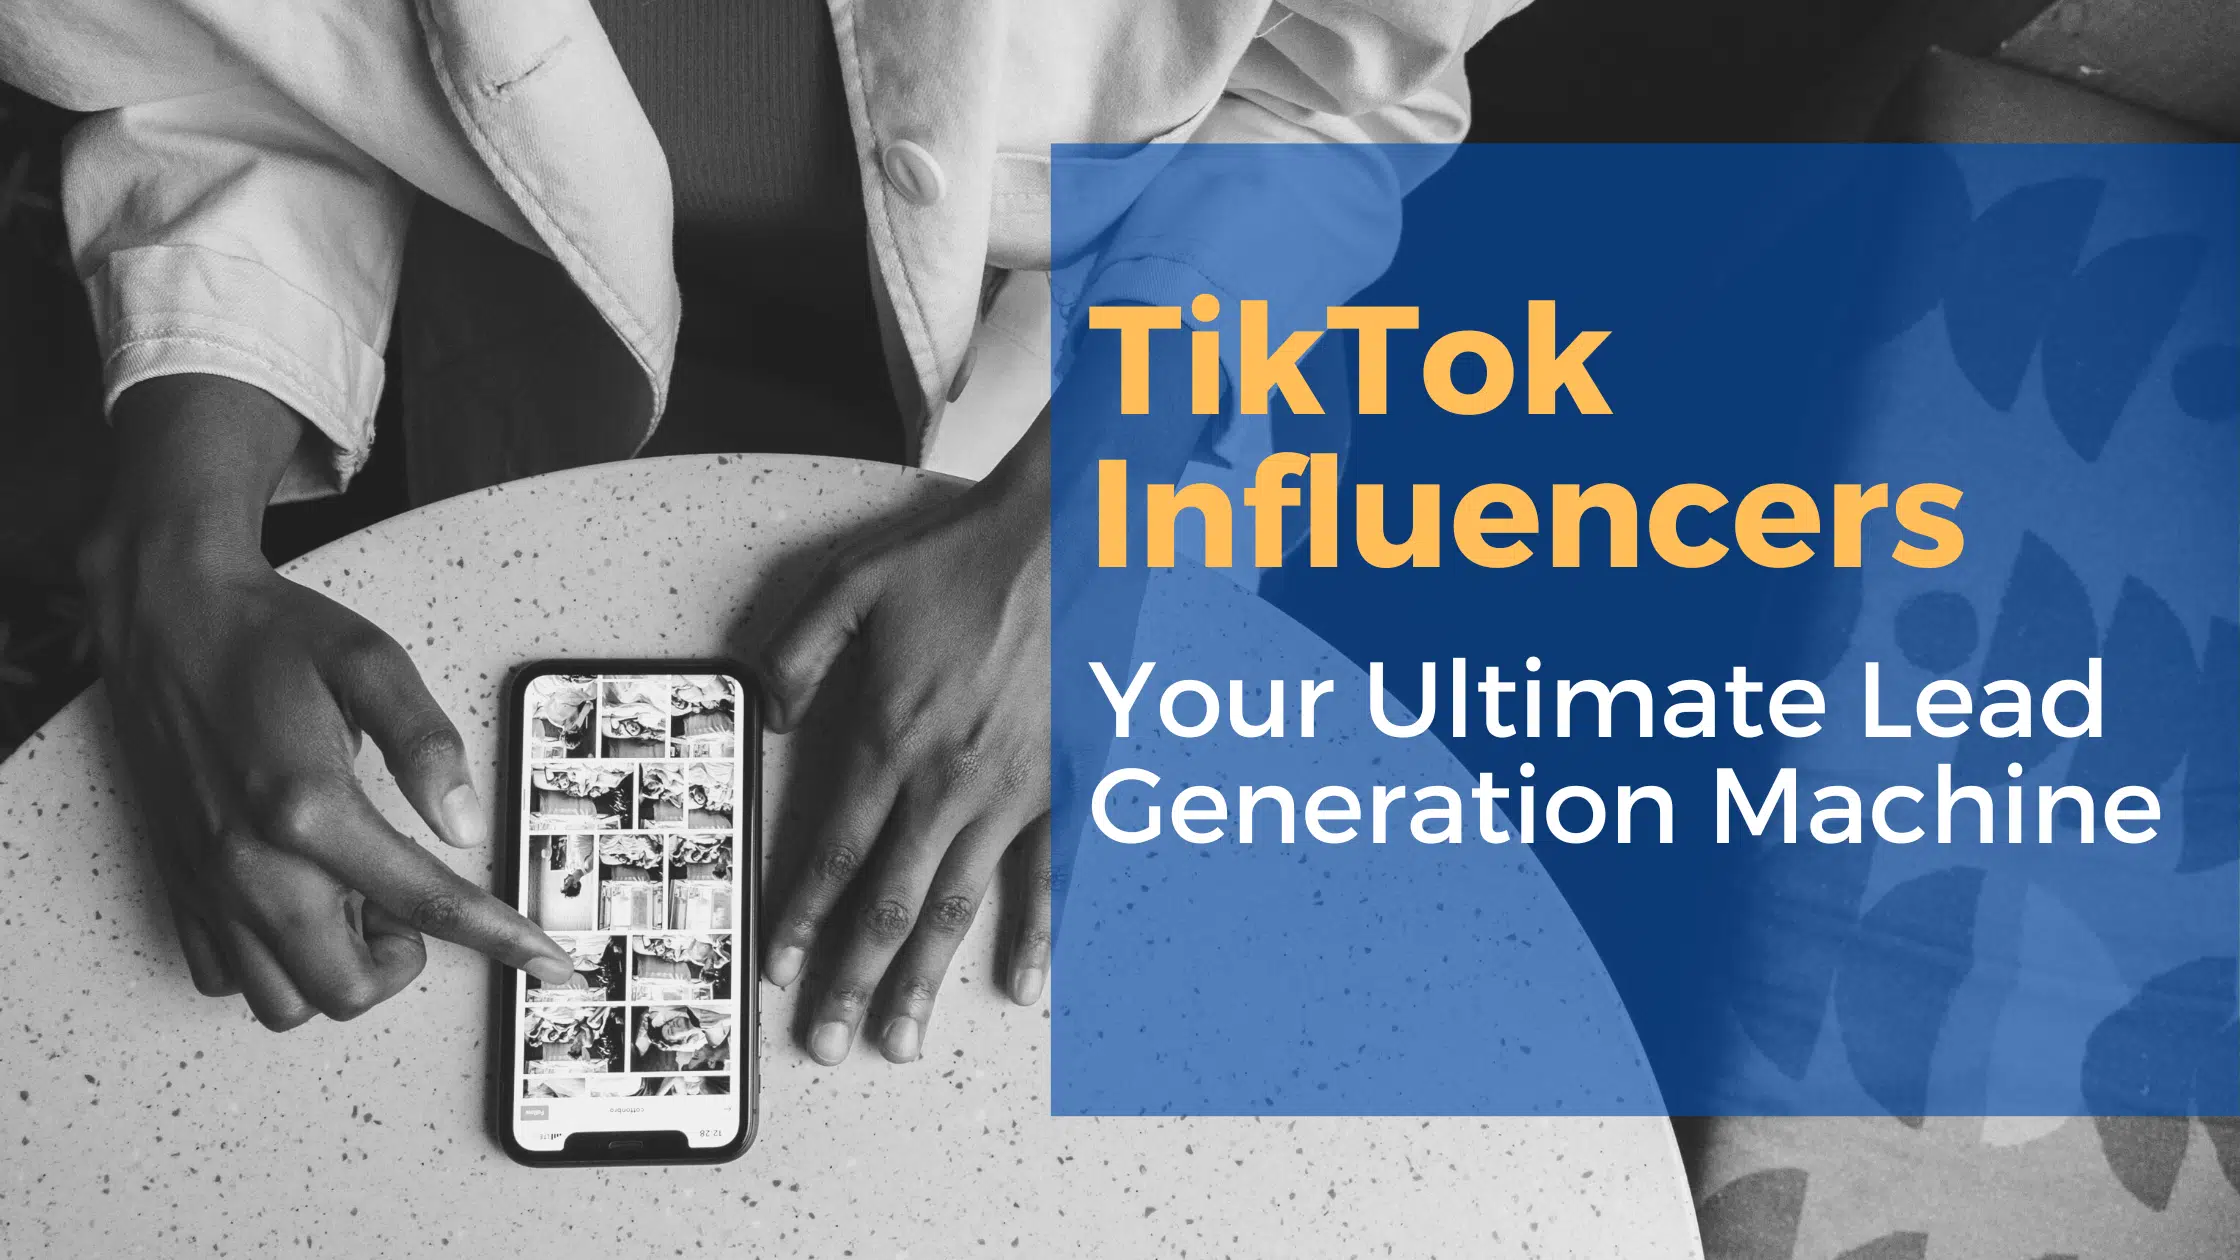 TikTok Influencers: Your Ultimate Lead Generation Machine